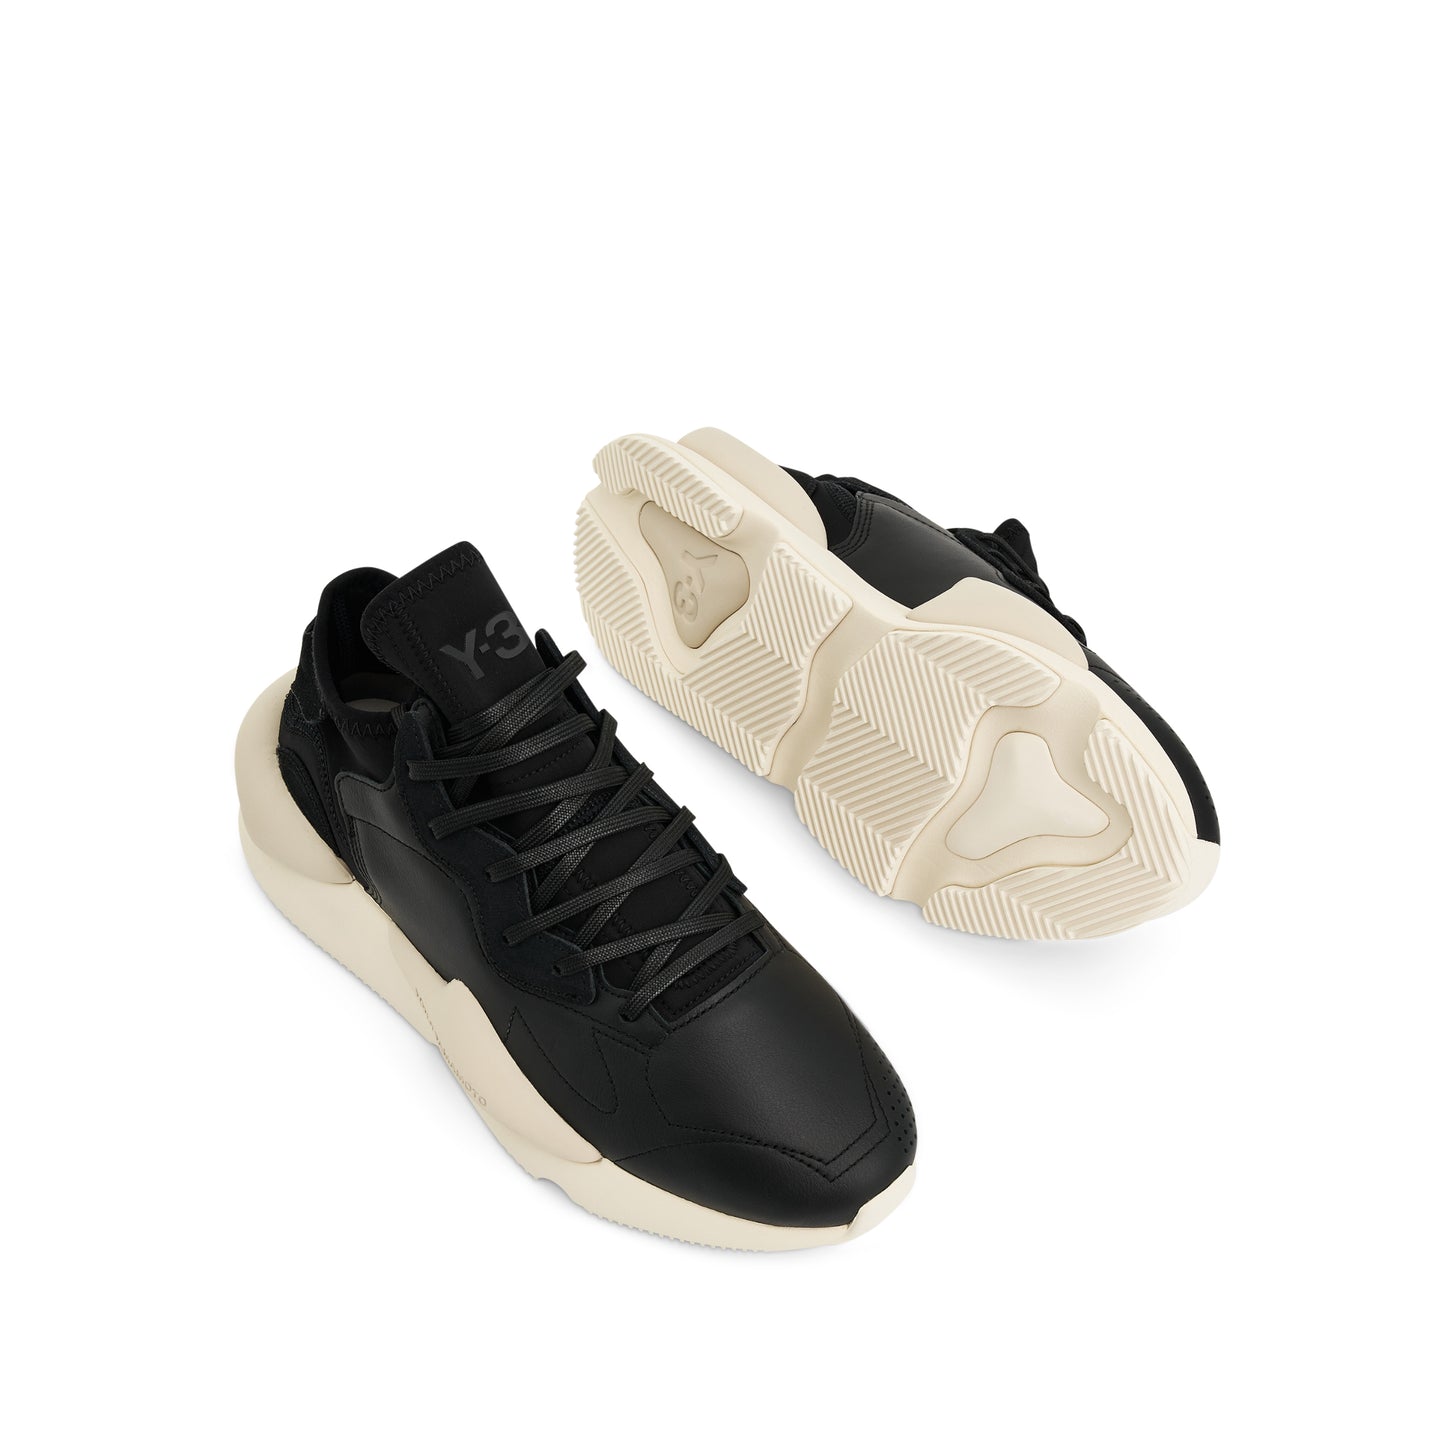 Kaiwa Sneaker in Black/Off White/Brown